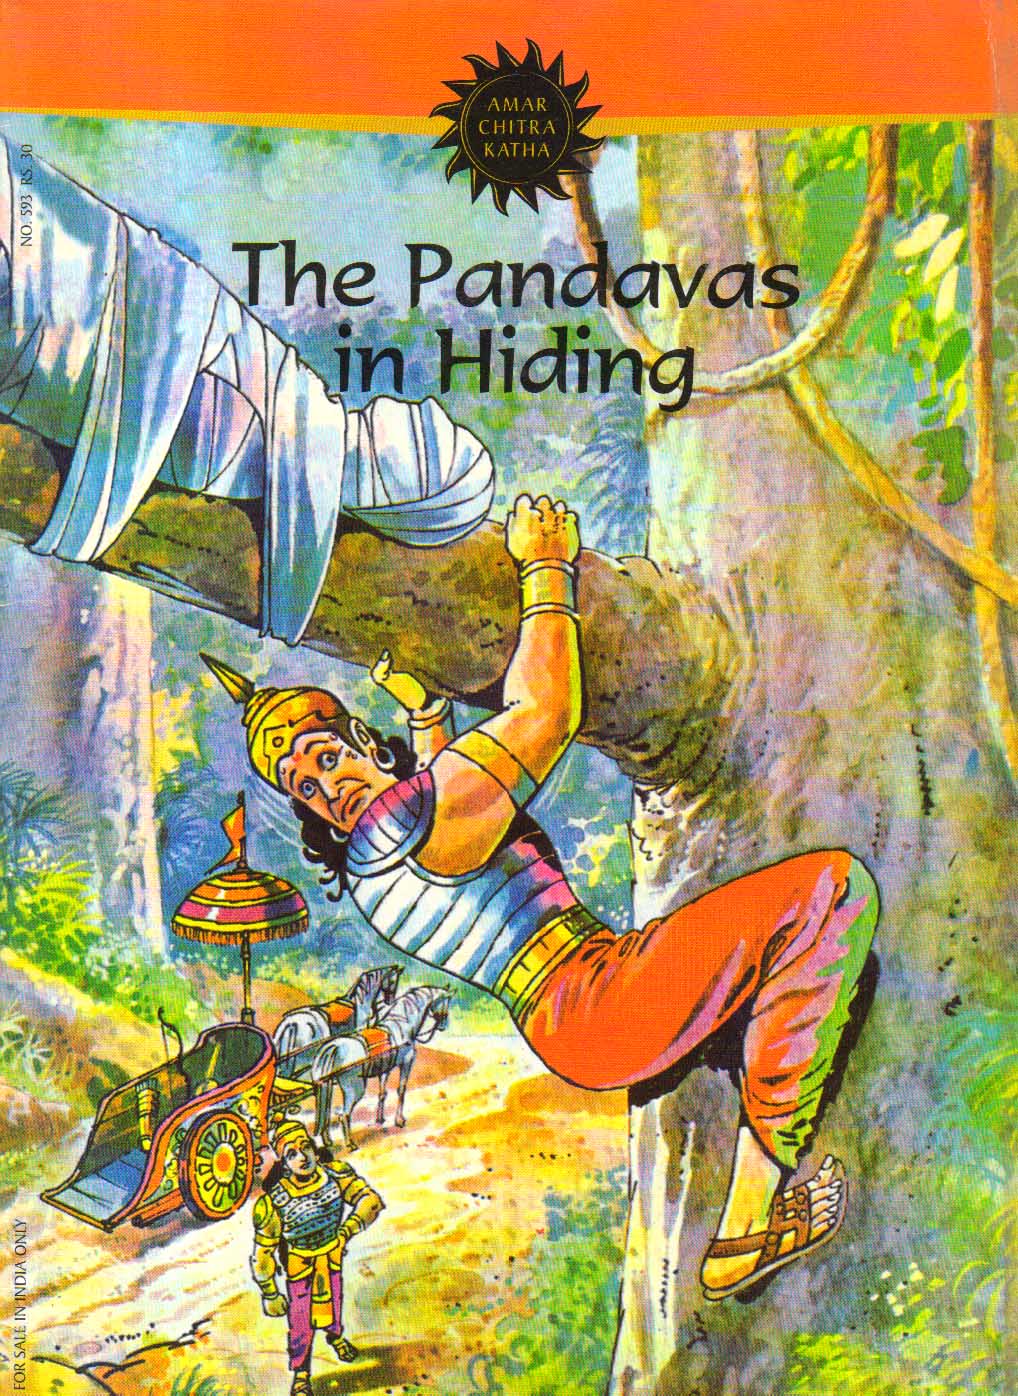 The Pandavas in Hiding.